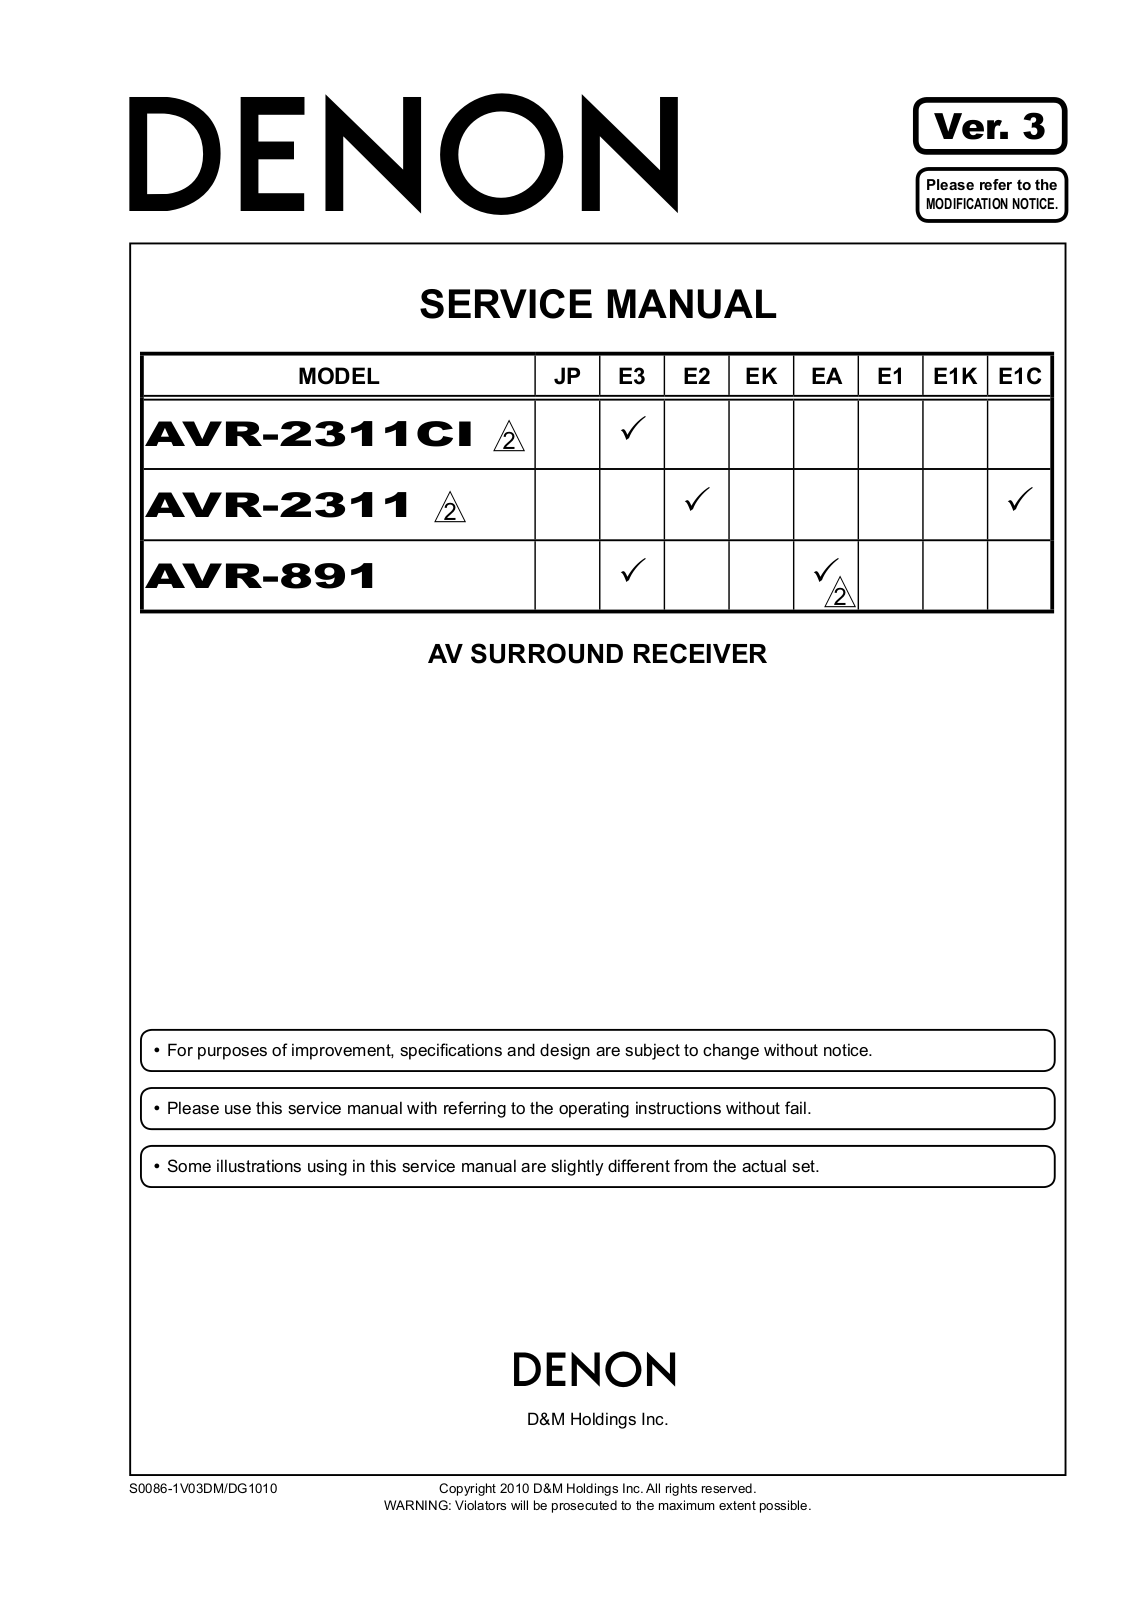 Denon AVR-2311-CI, AVR-891 Service Manual